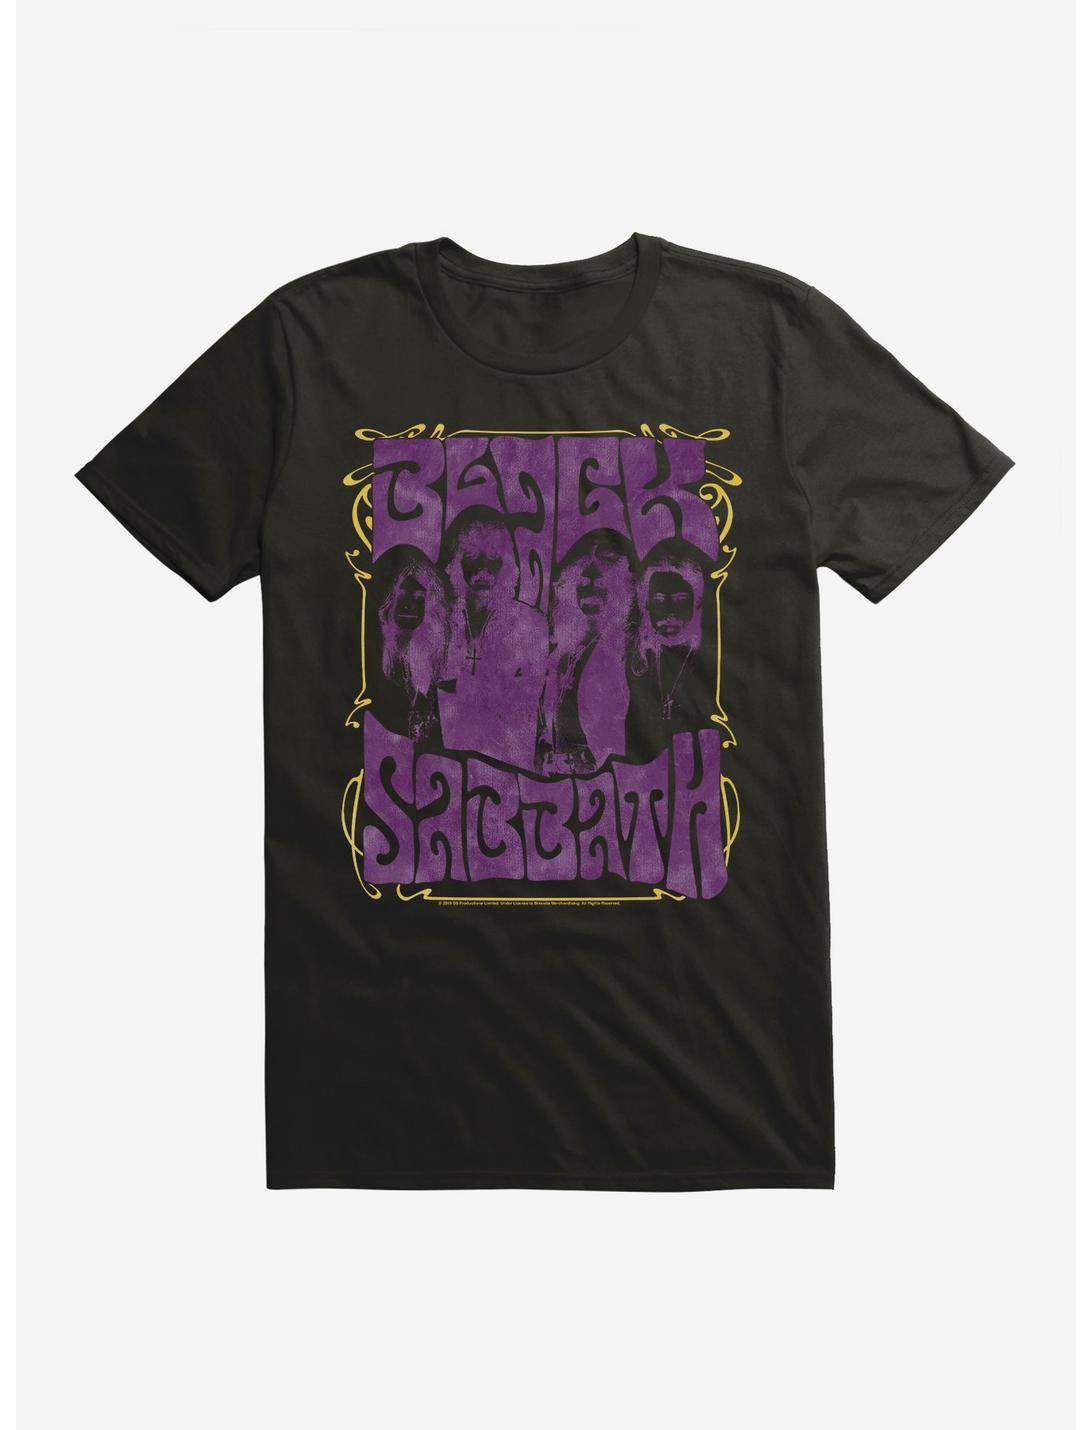 Black Sabbath Groovy Group T-Shirt, BLACK, hi-res